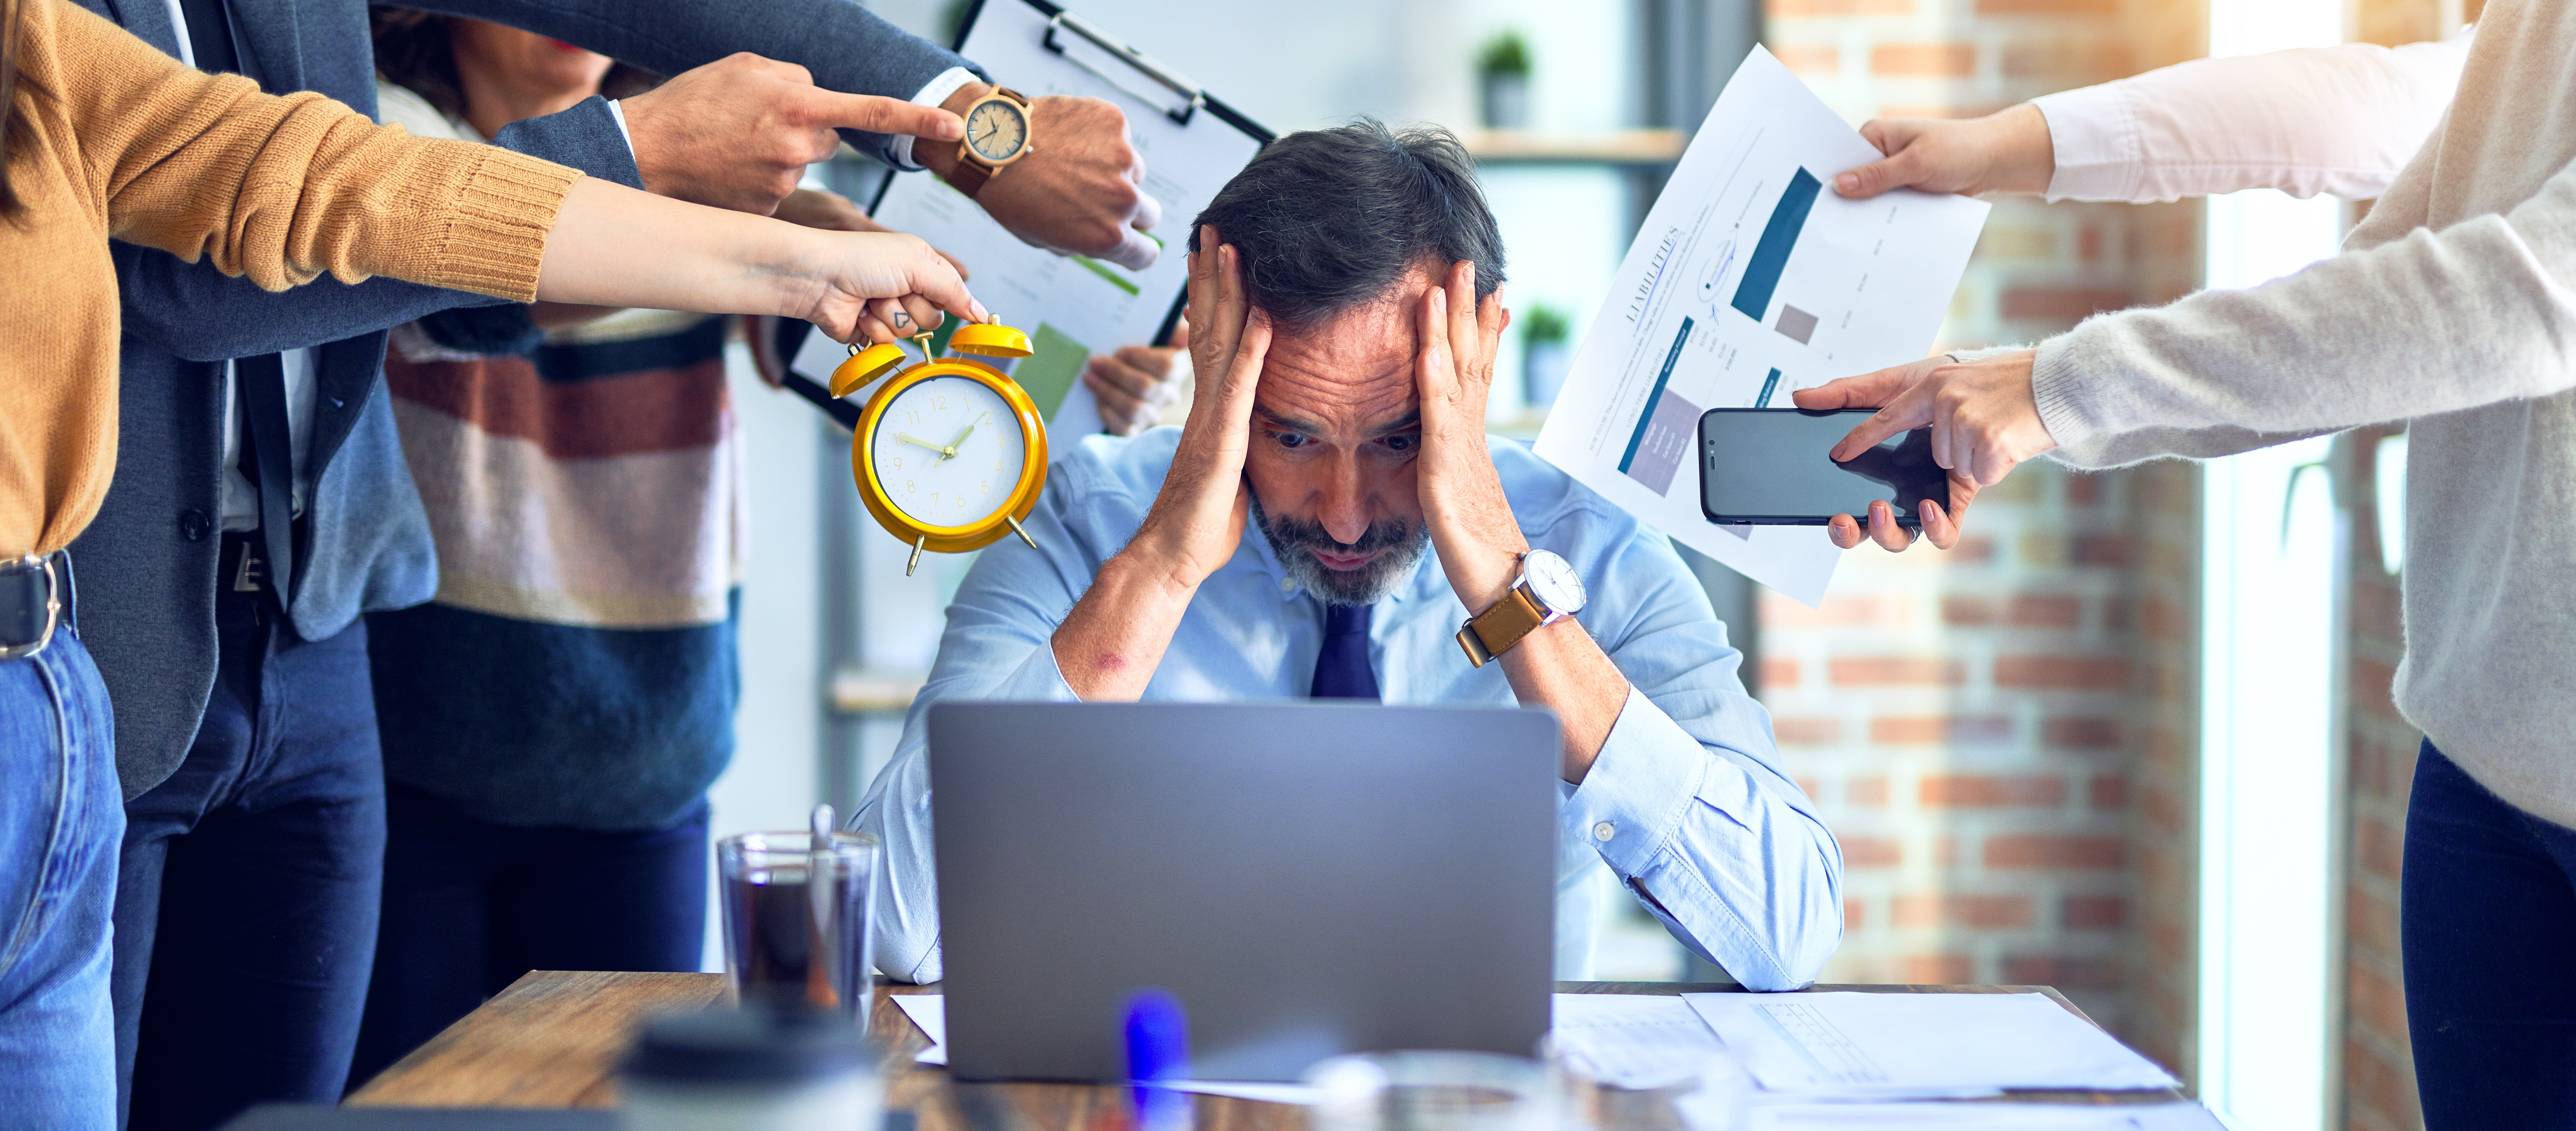 IT Help Desk Burnout: Causes, Impact, & How to Prevent It